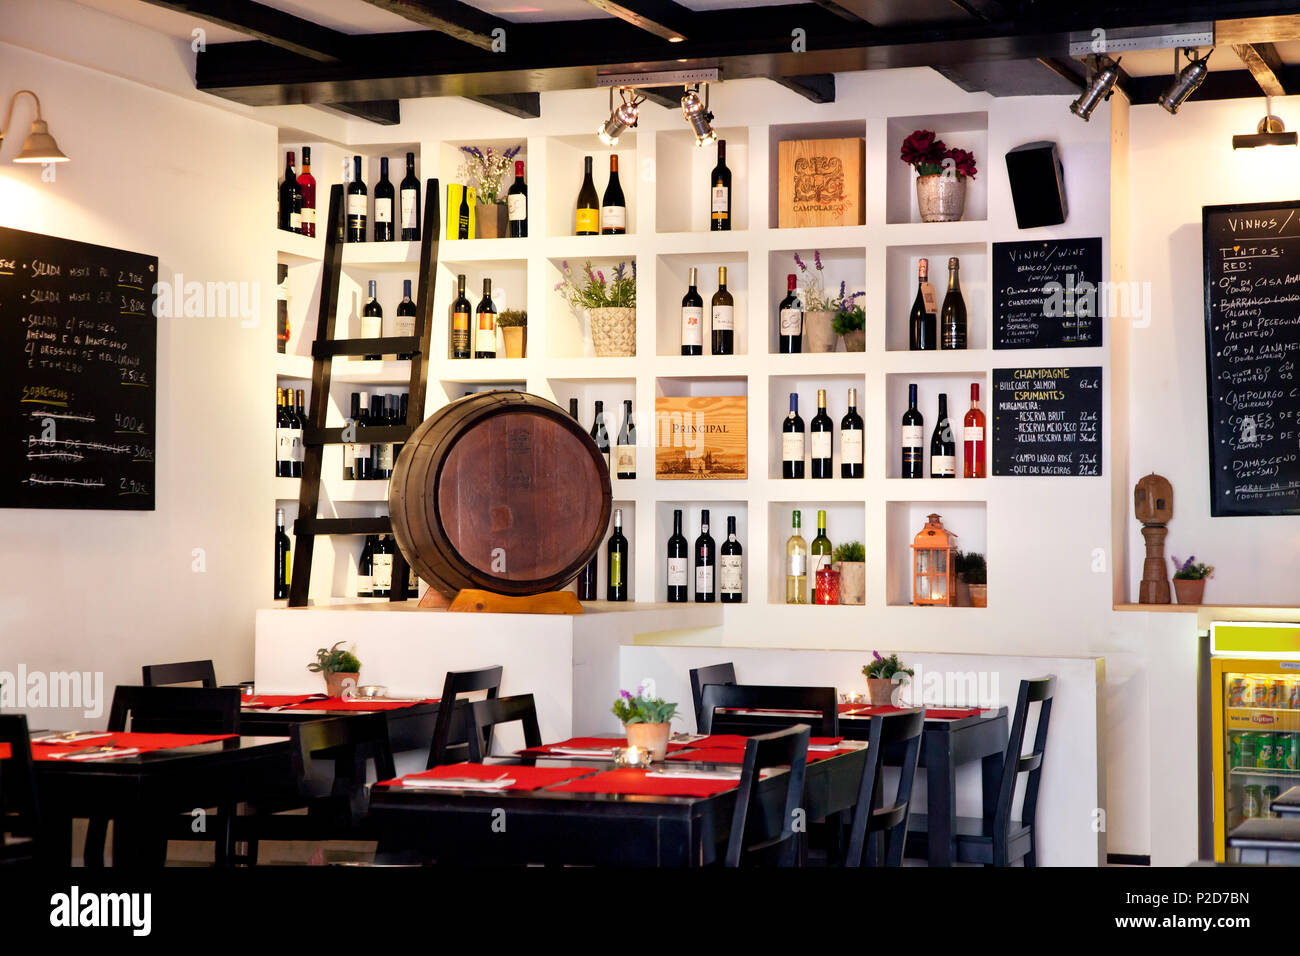 Wine bottles in a restaurant, Algarve, Portugal Stock Photo